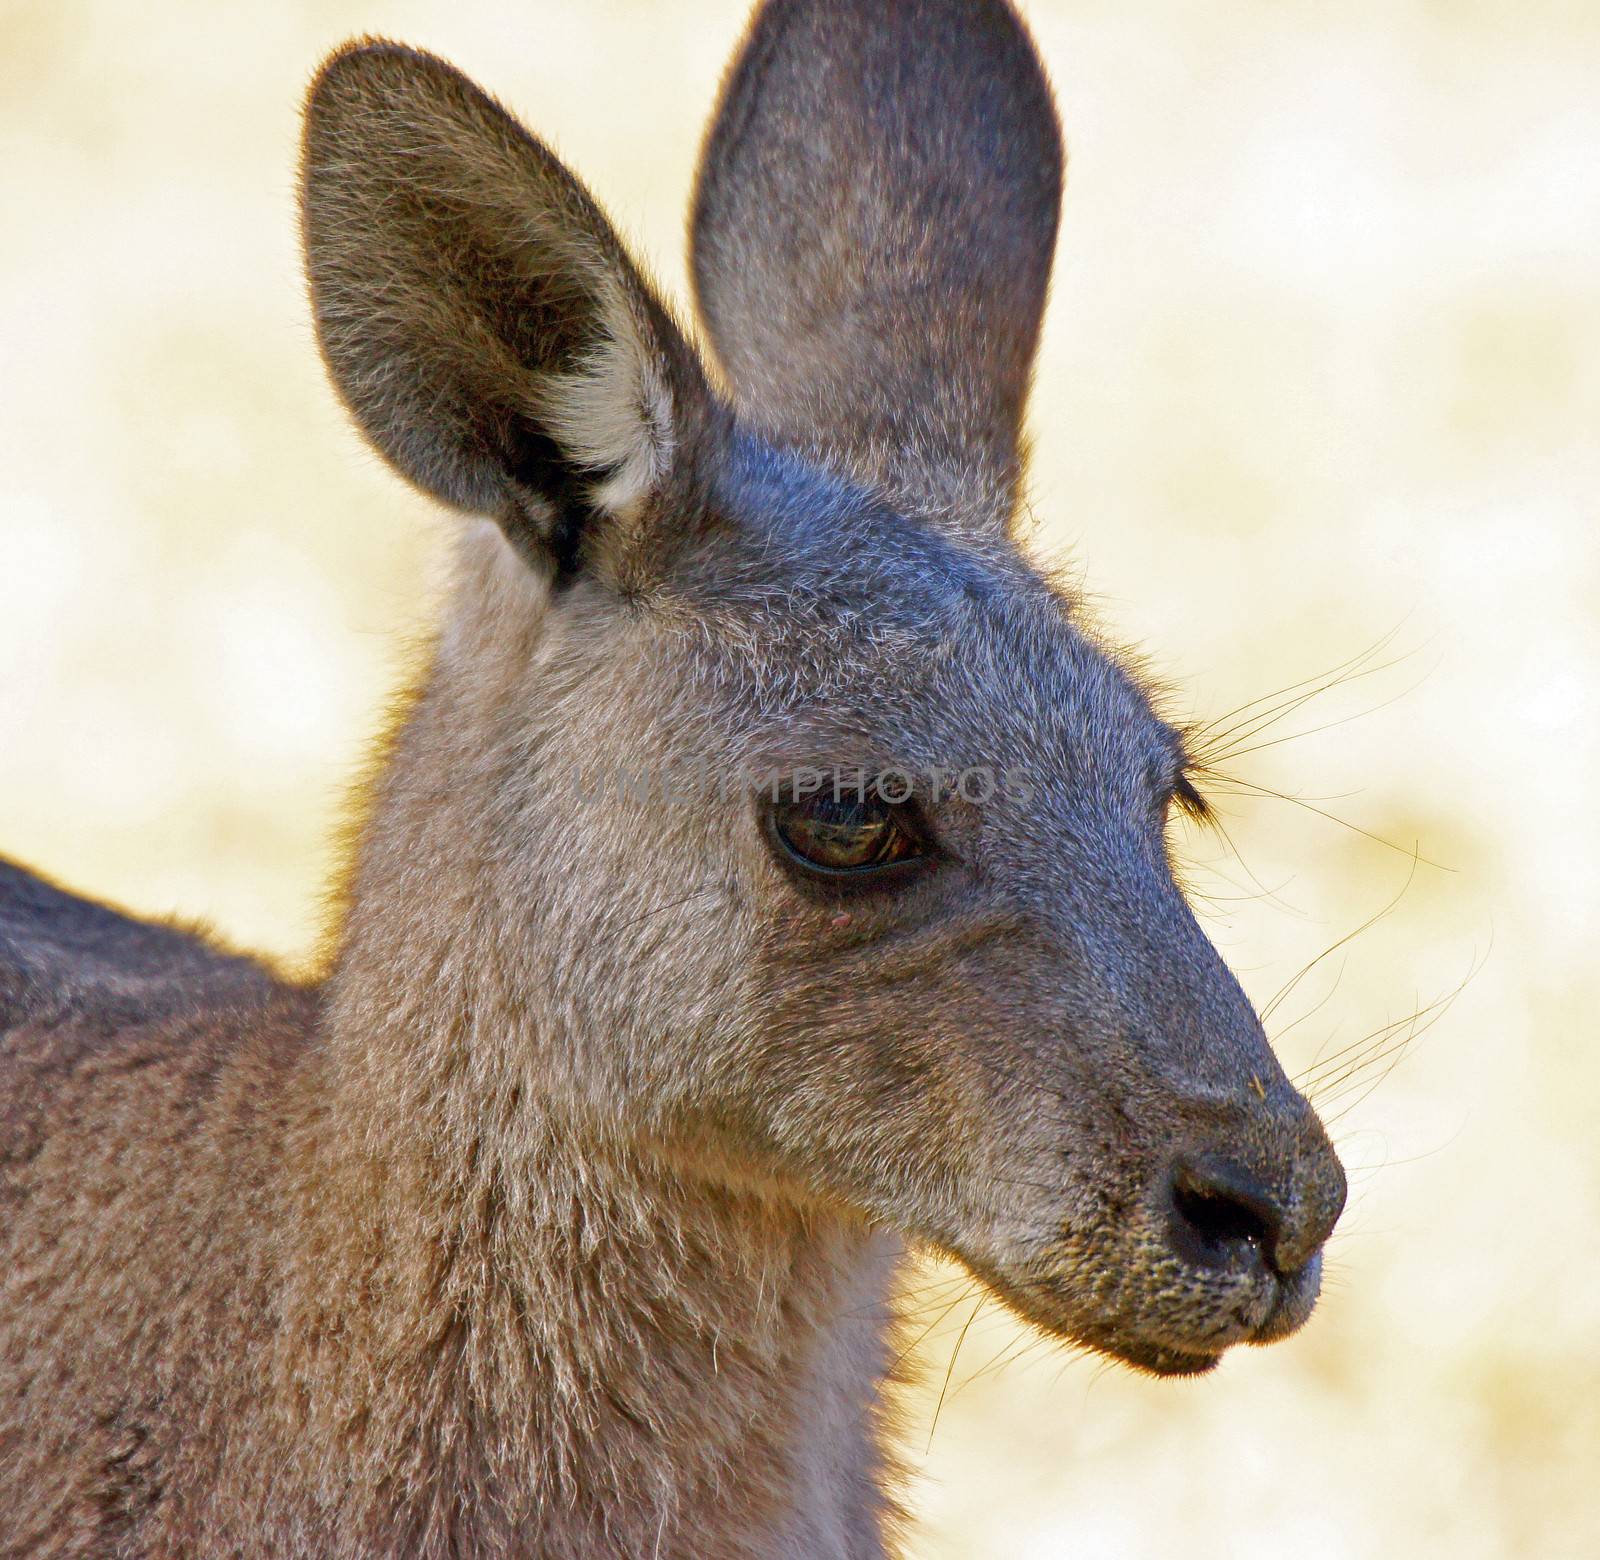 Great Grey Kangaroo, Grampians, Australia